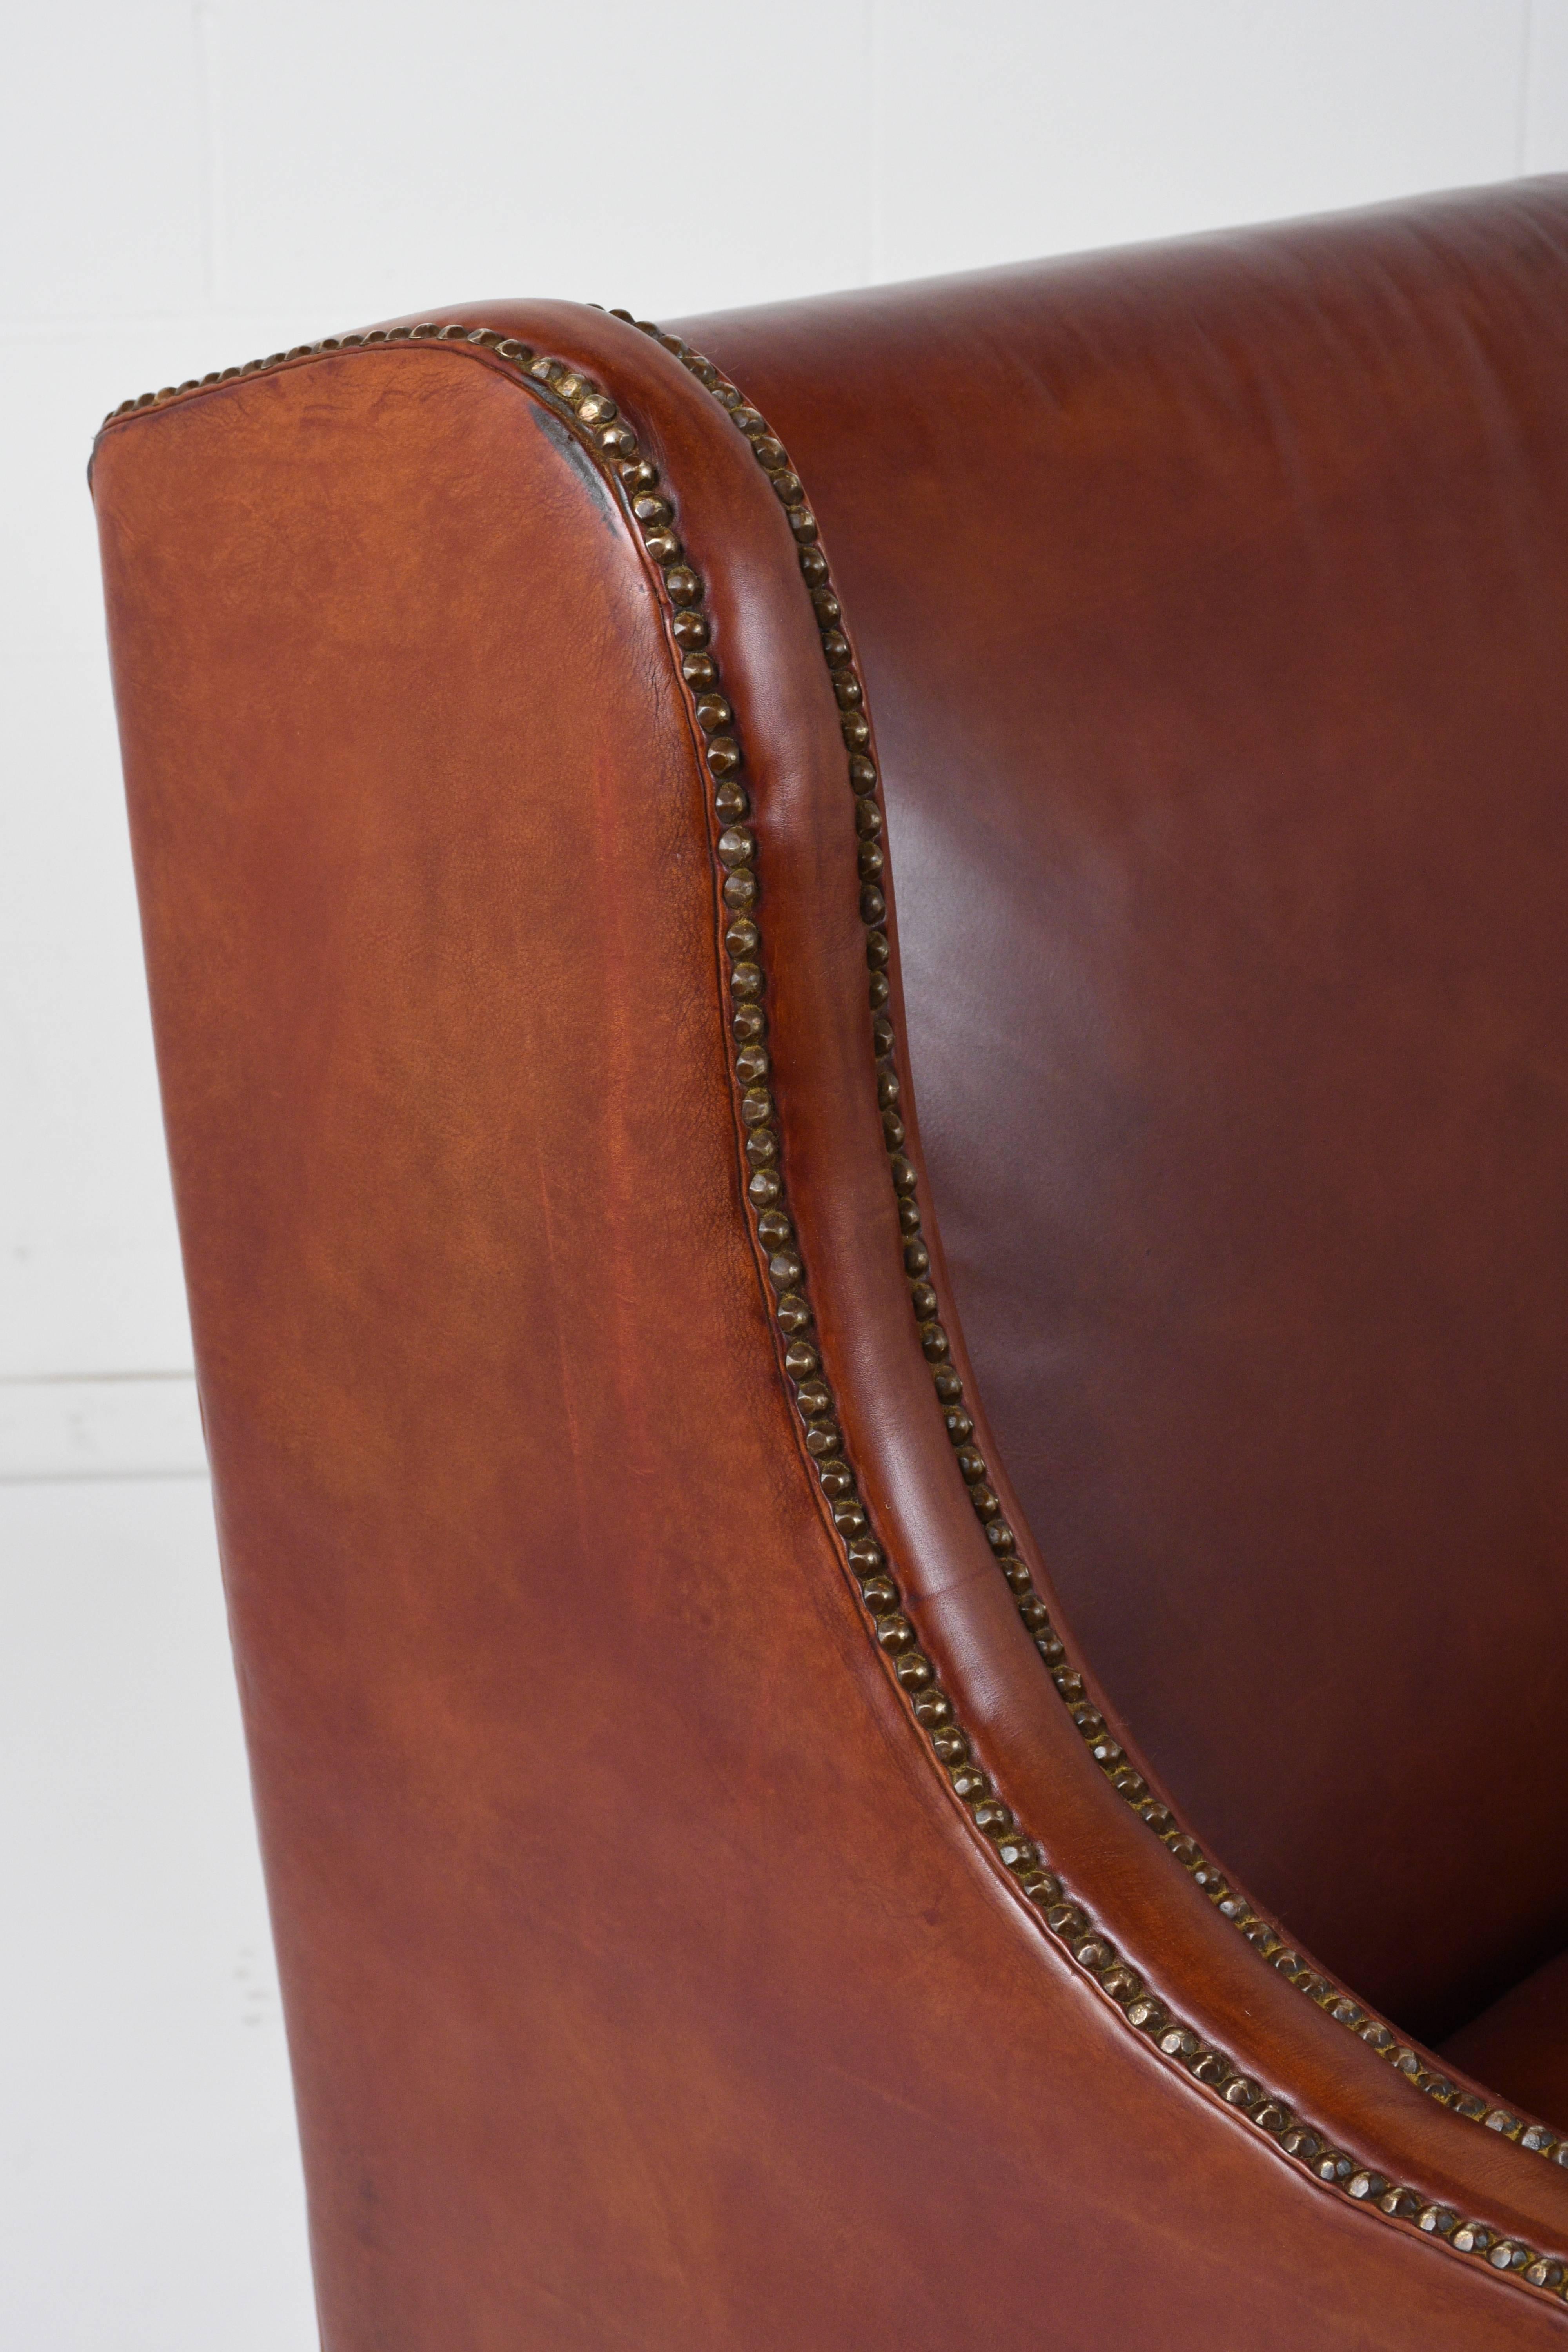 vintage leather sofas